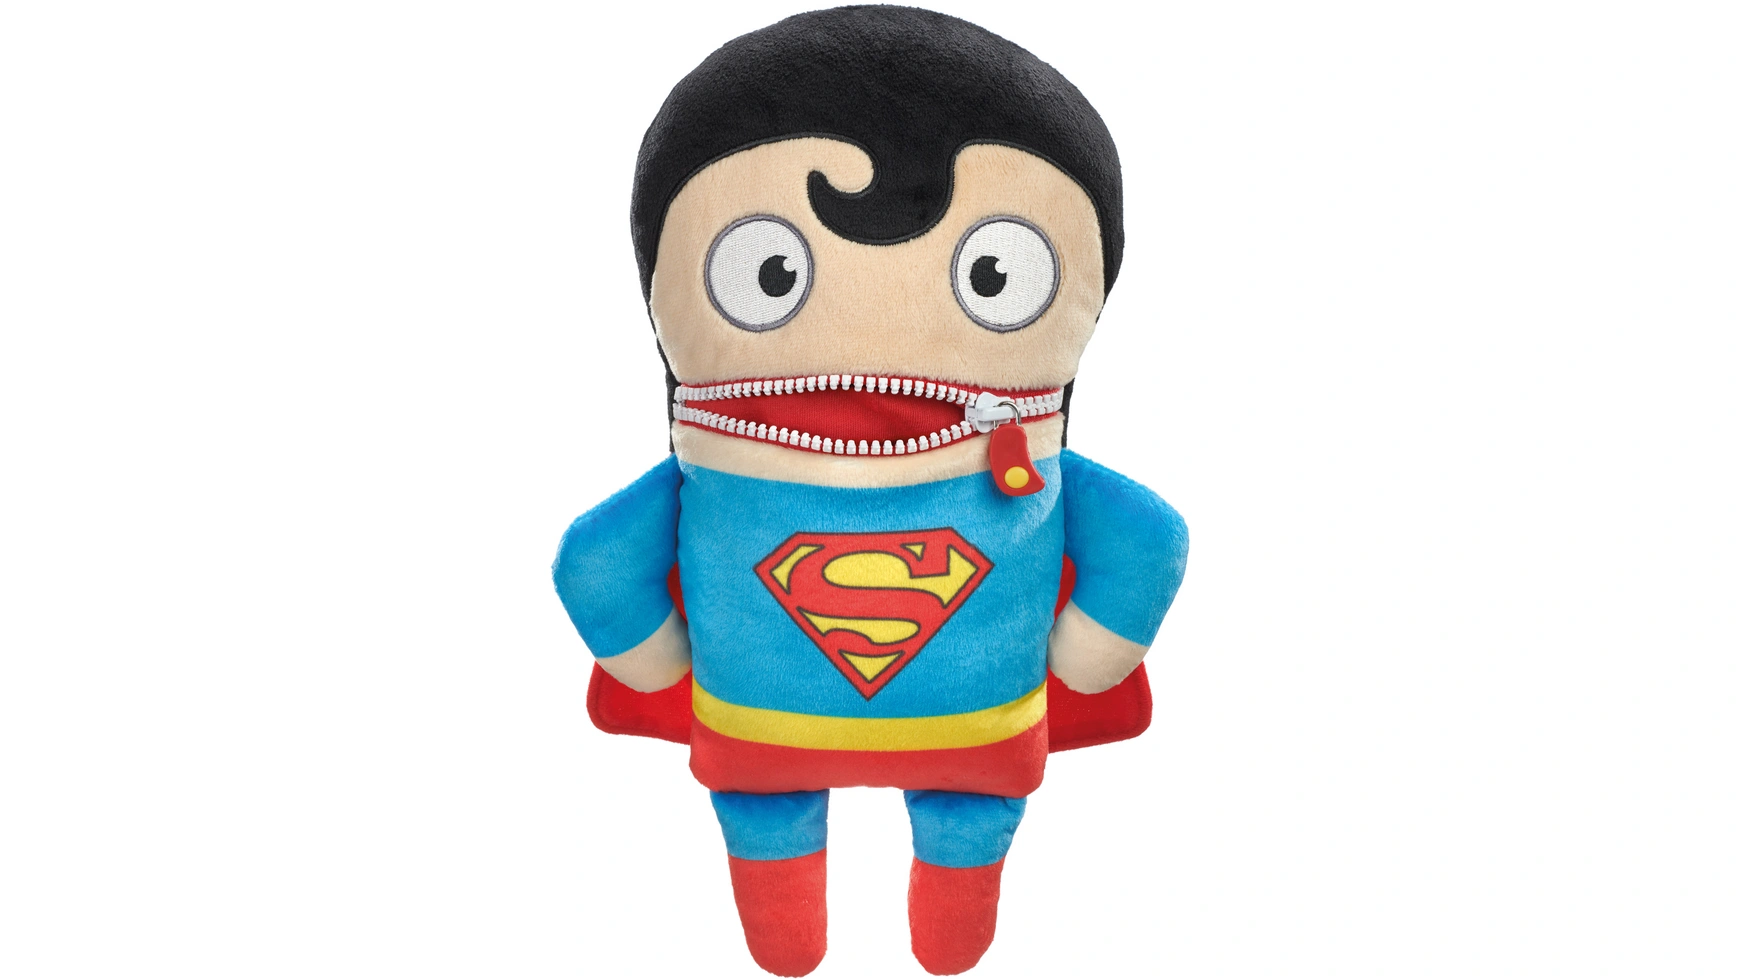 Schmidt Spiele Worry Eater DC Super Hero: Worry Eater, Супермен, 29 см игровые фигурки dc comics фигурка супергерой 10 см